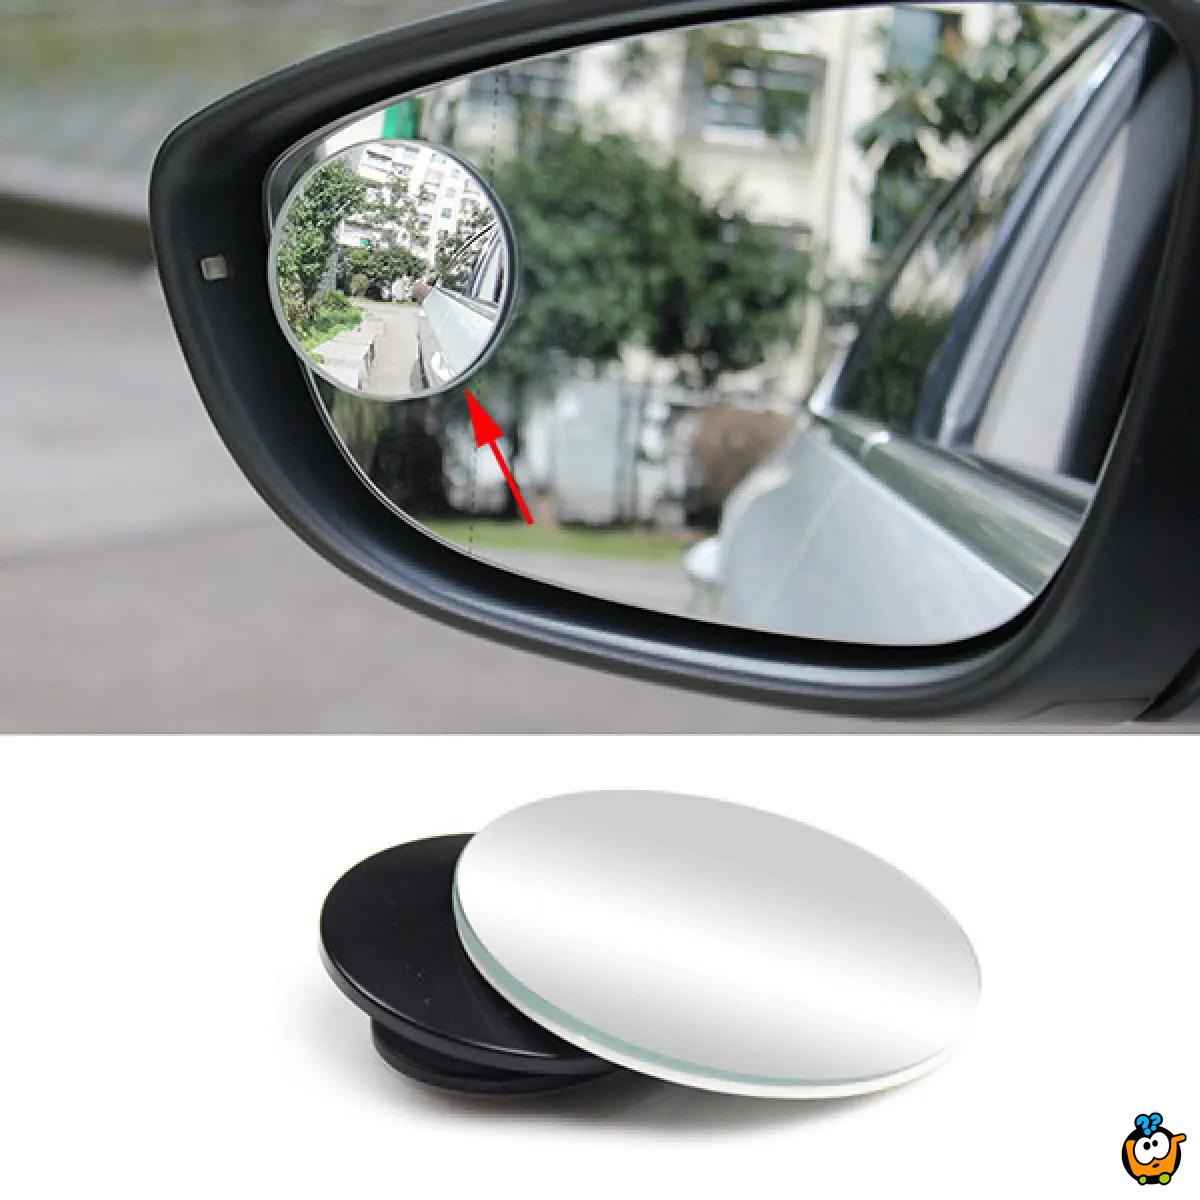 Blind Spot Mirrors - set od 2 dodatna retrovizora za široki ugao